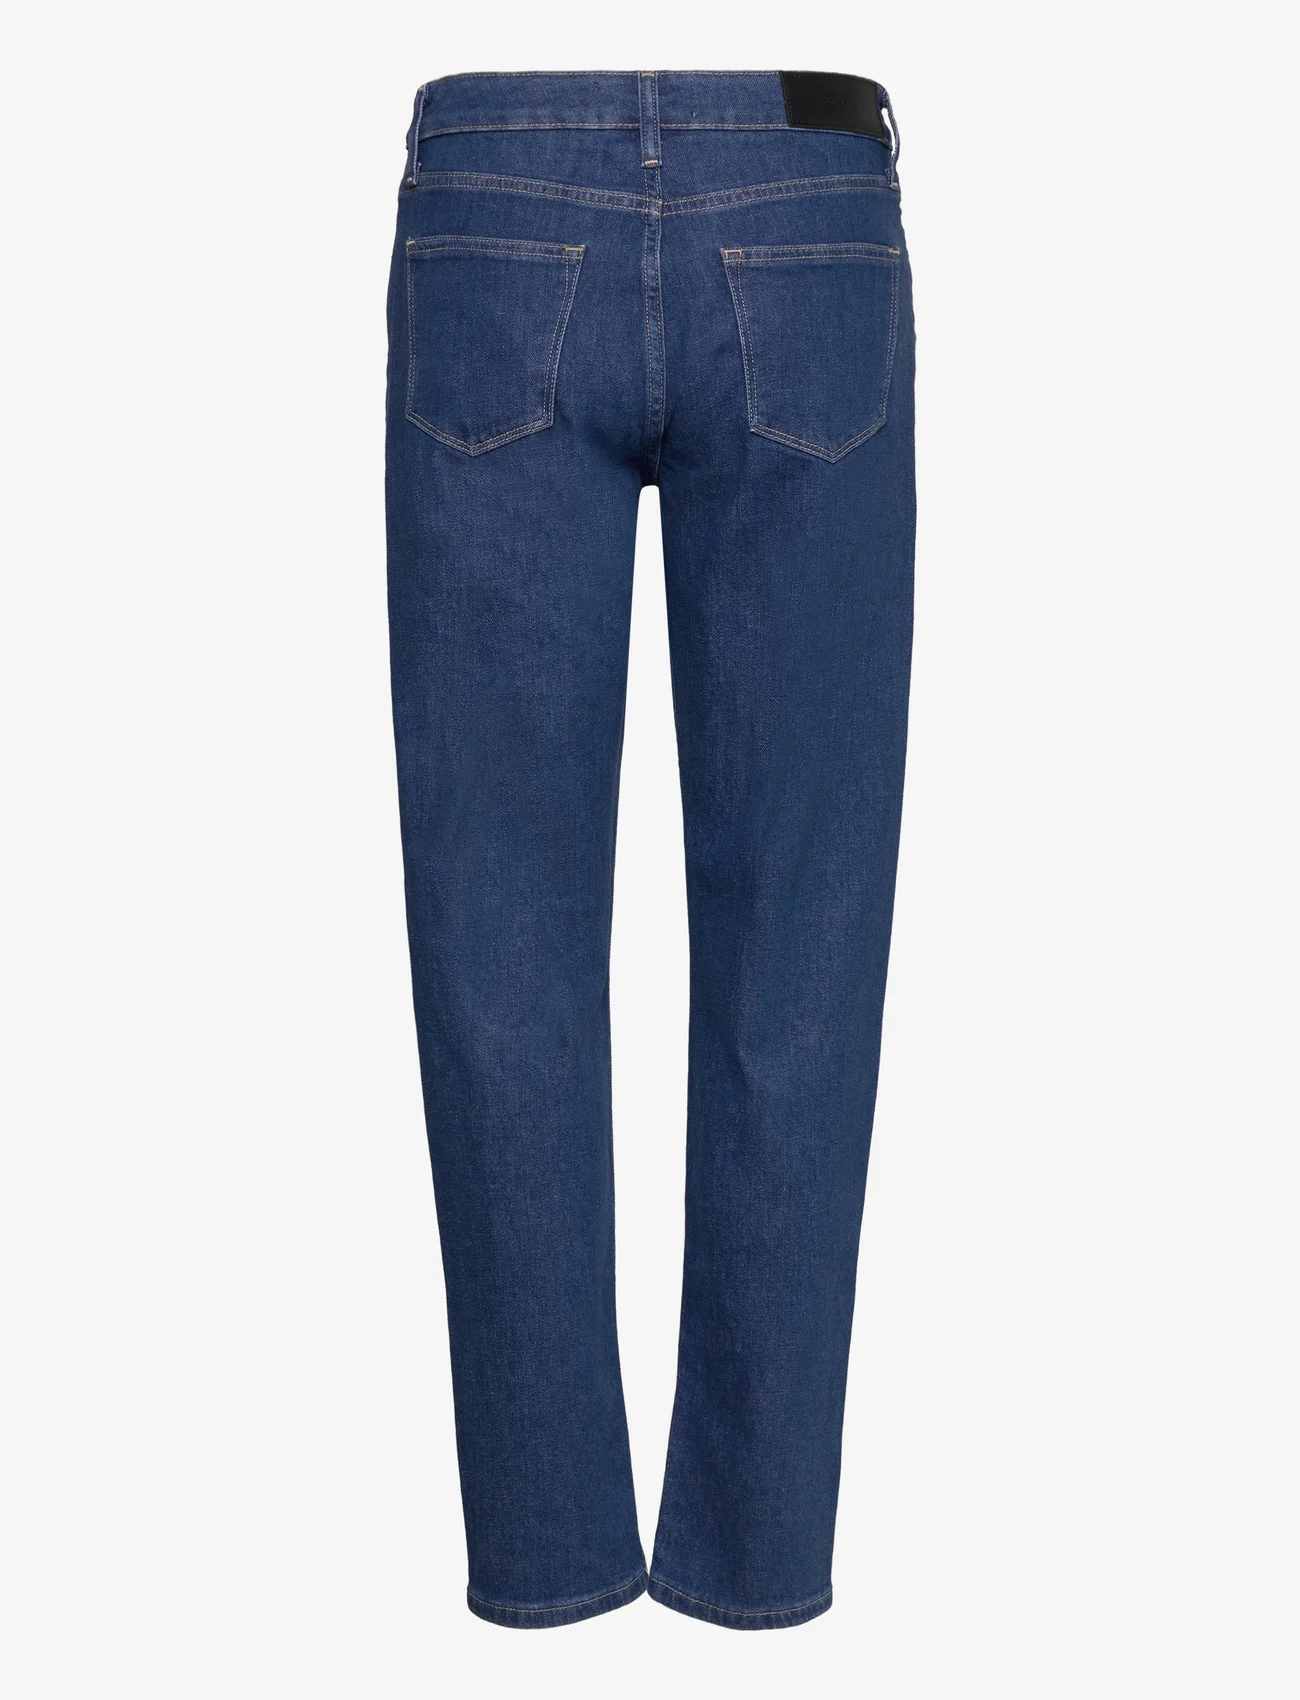 Calvin Klein - MR SLIM - SOFT MID BLUE - slim fit jeans - denim medium - 1